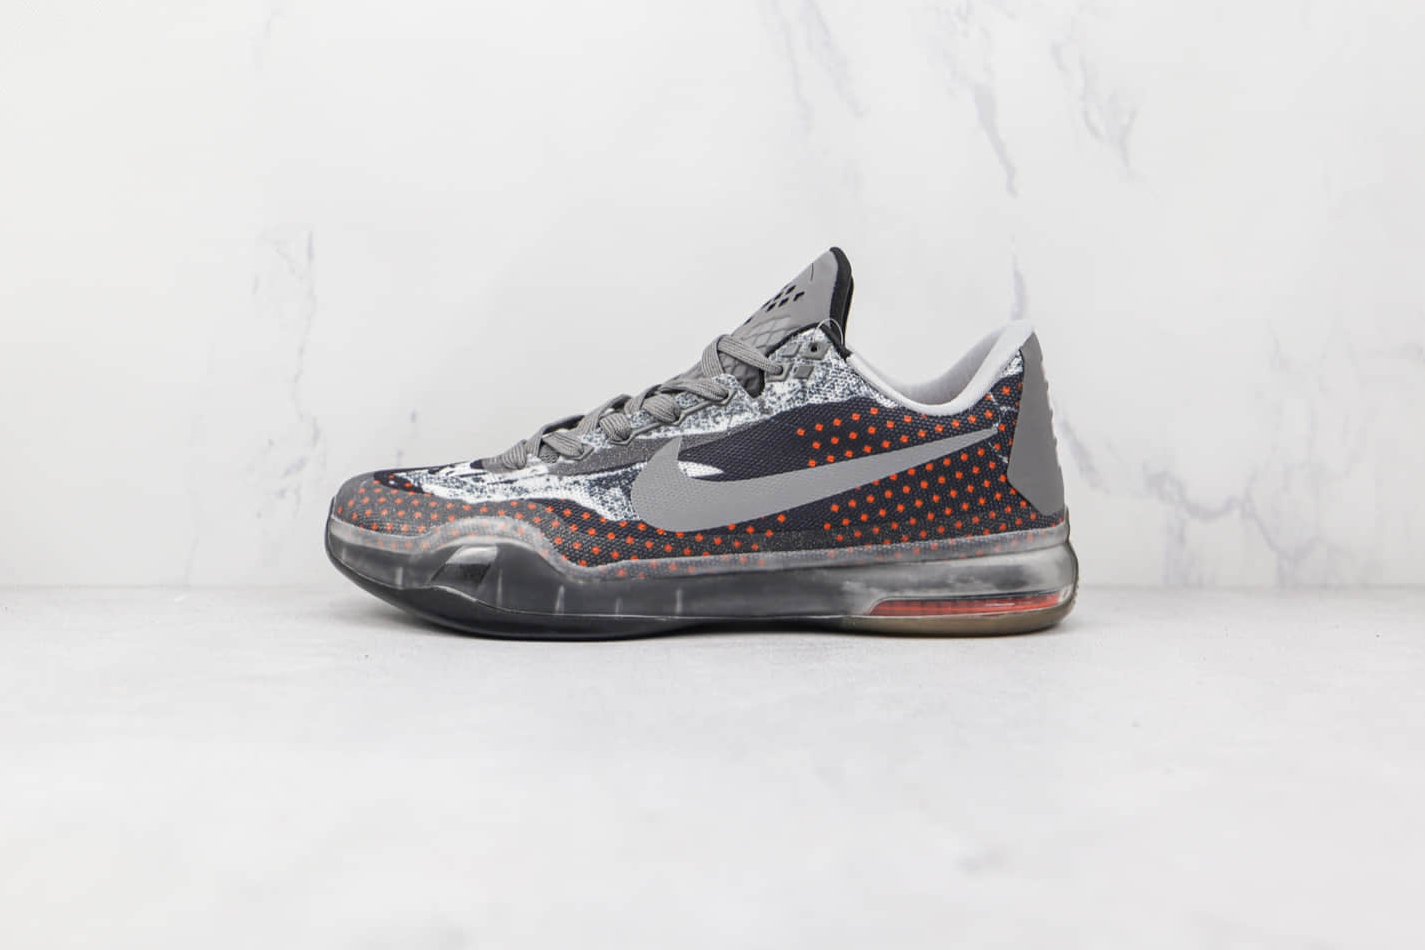 Nike Kobe 10 'Pain' 705317-001 - Premium Basketball Shoes for Ultimate Performance